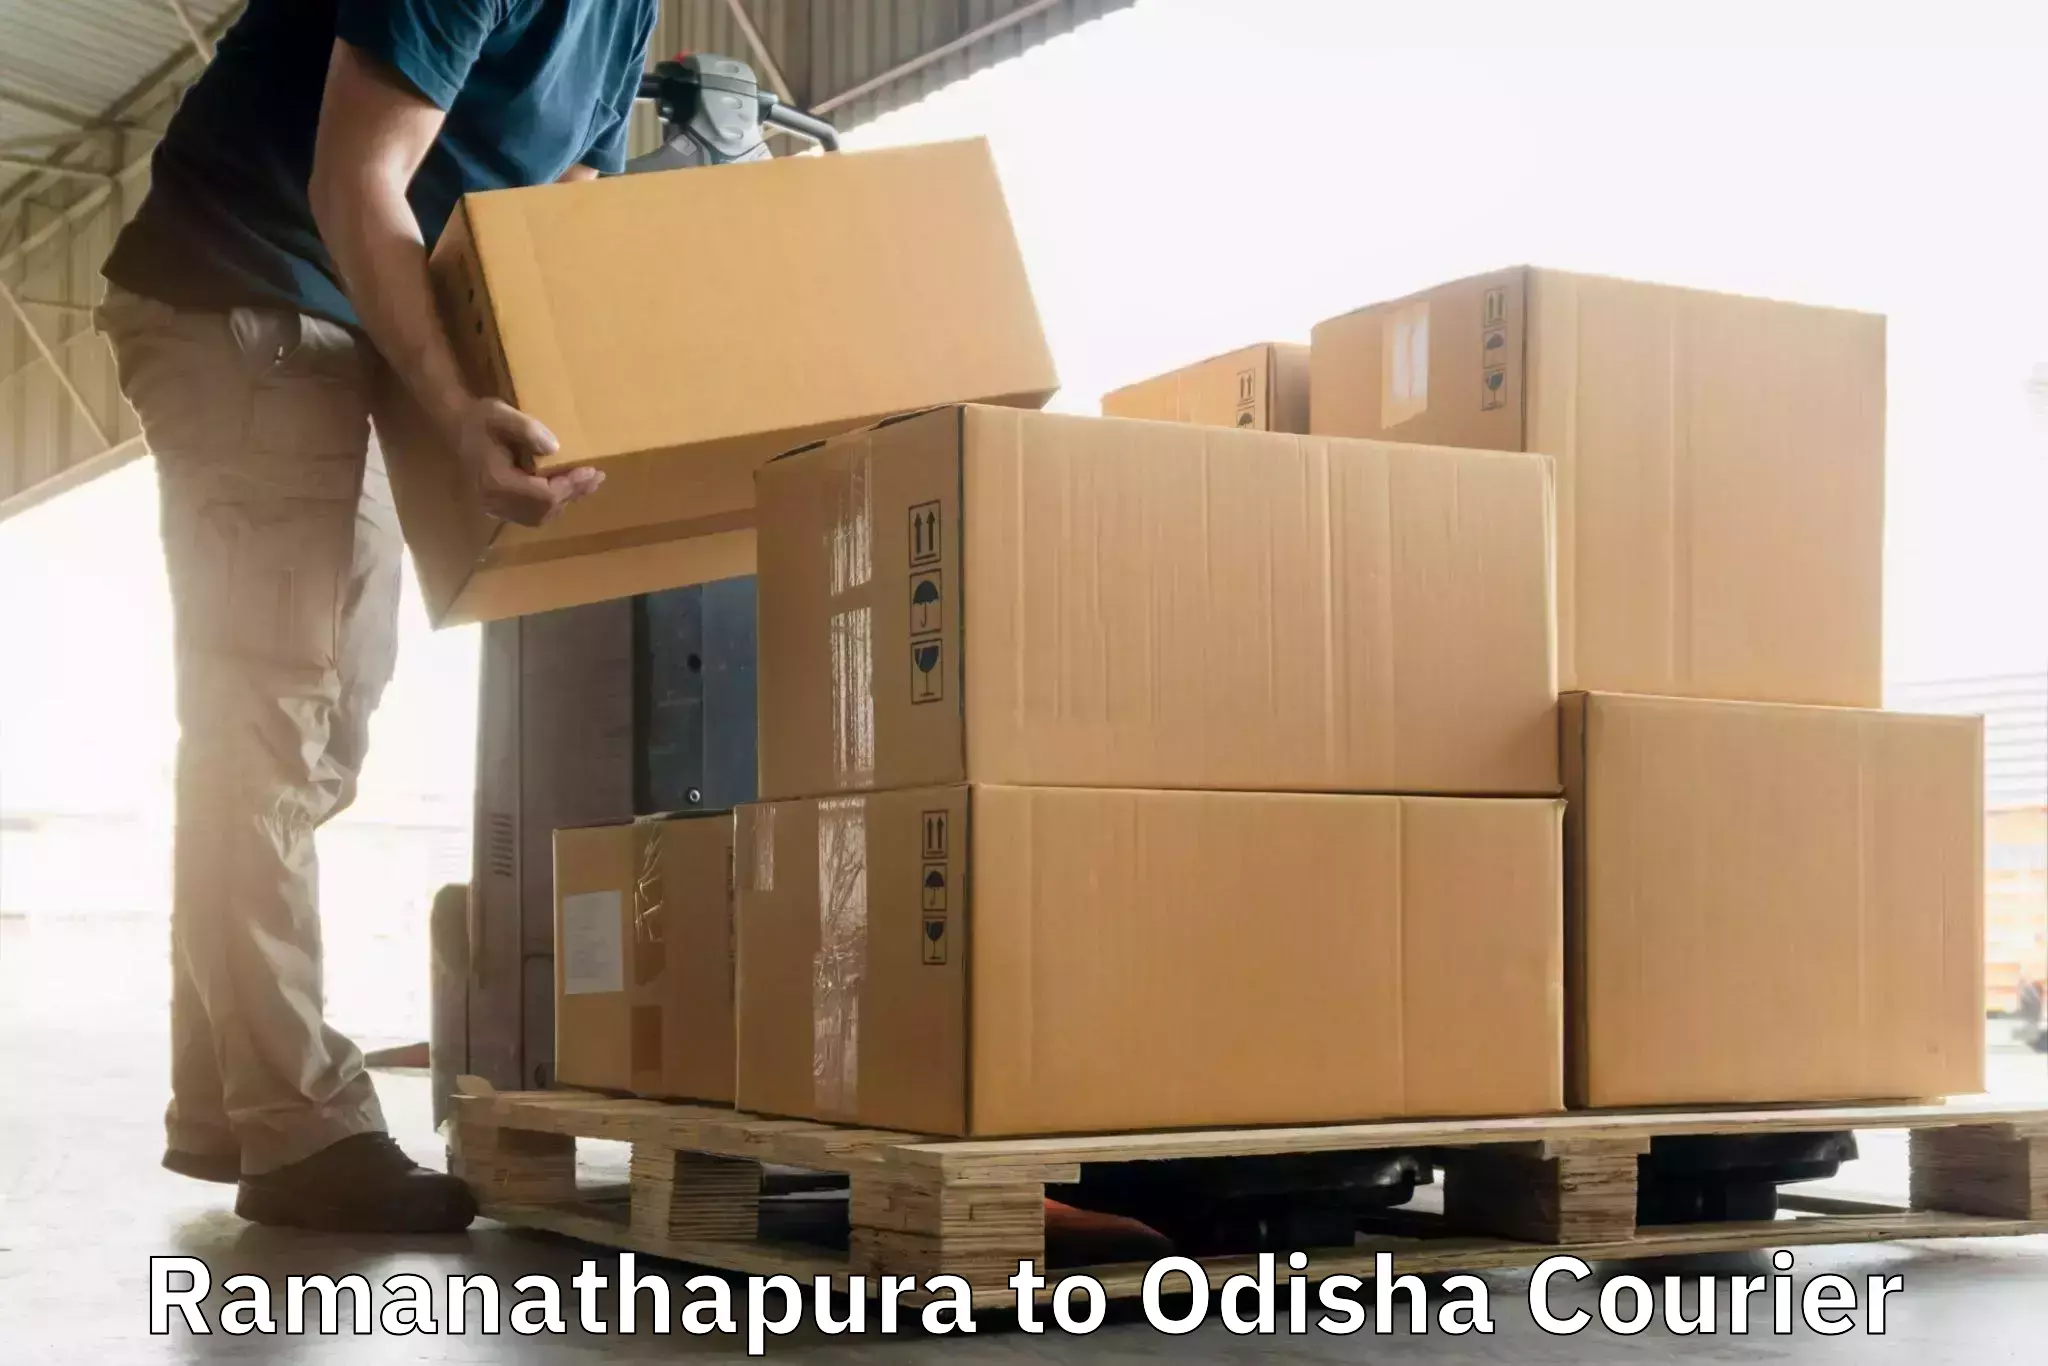 Courier service efficiency Ramanathapura to Angul